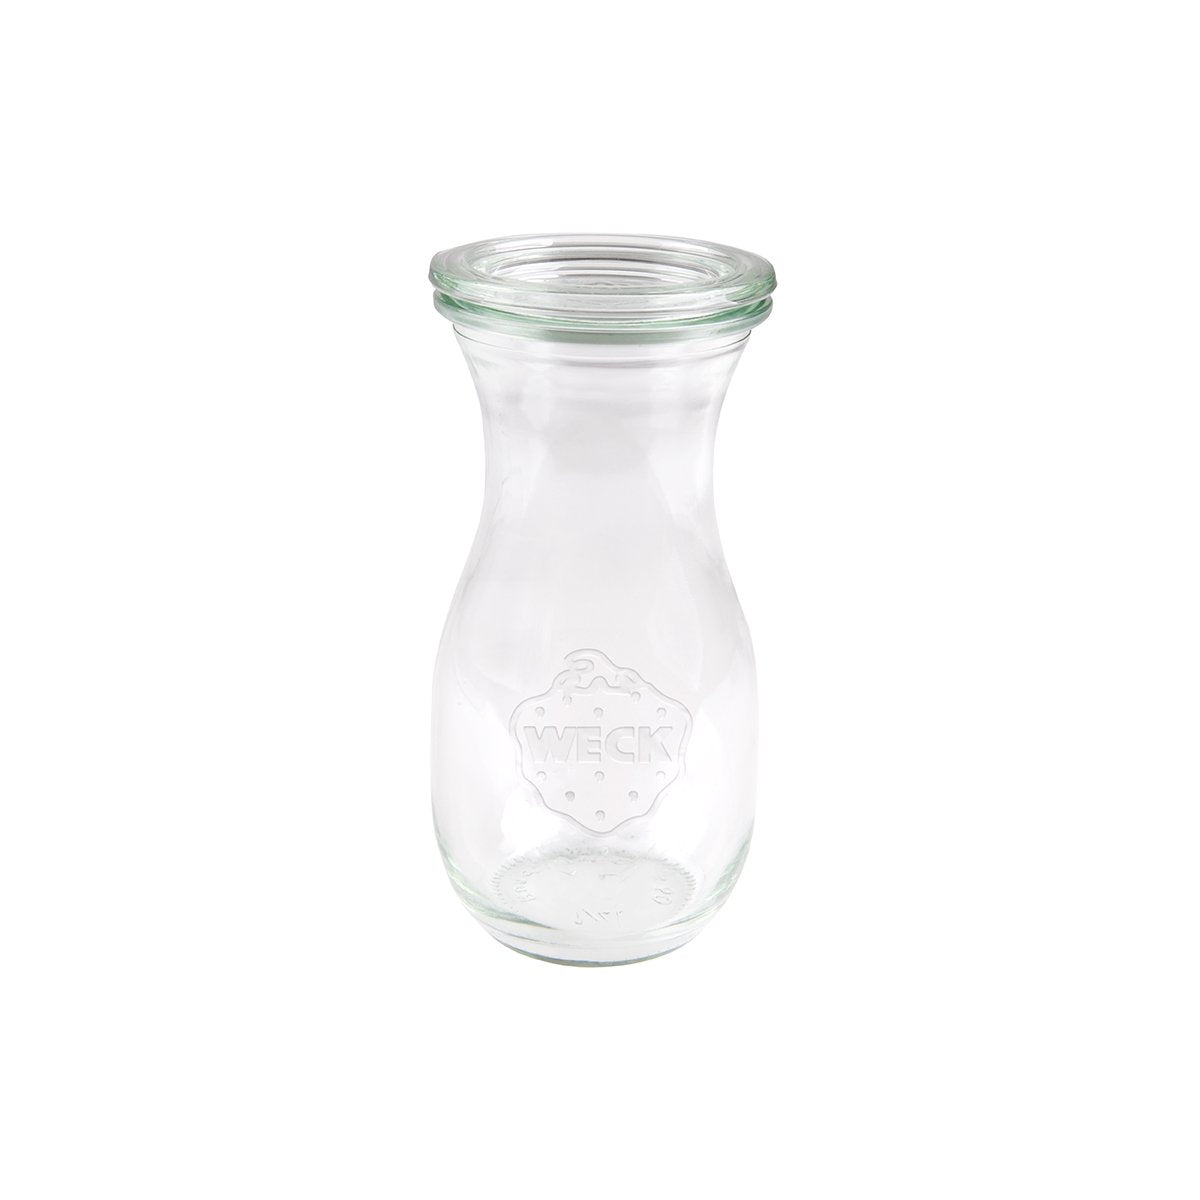 82307 Weck Bottle Jar with Lid 60x140mm / 290ml Tomkin Australia Hospitality Supplies